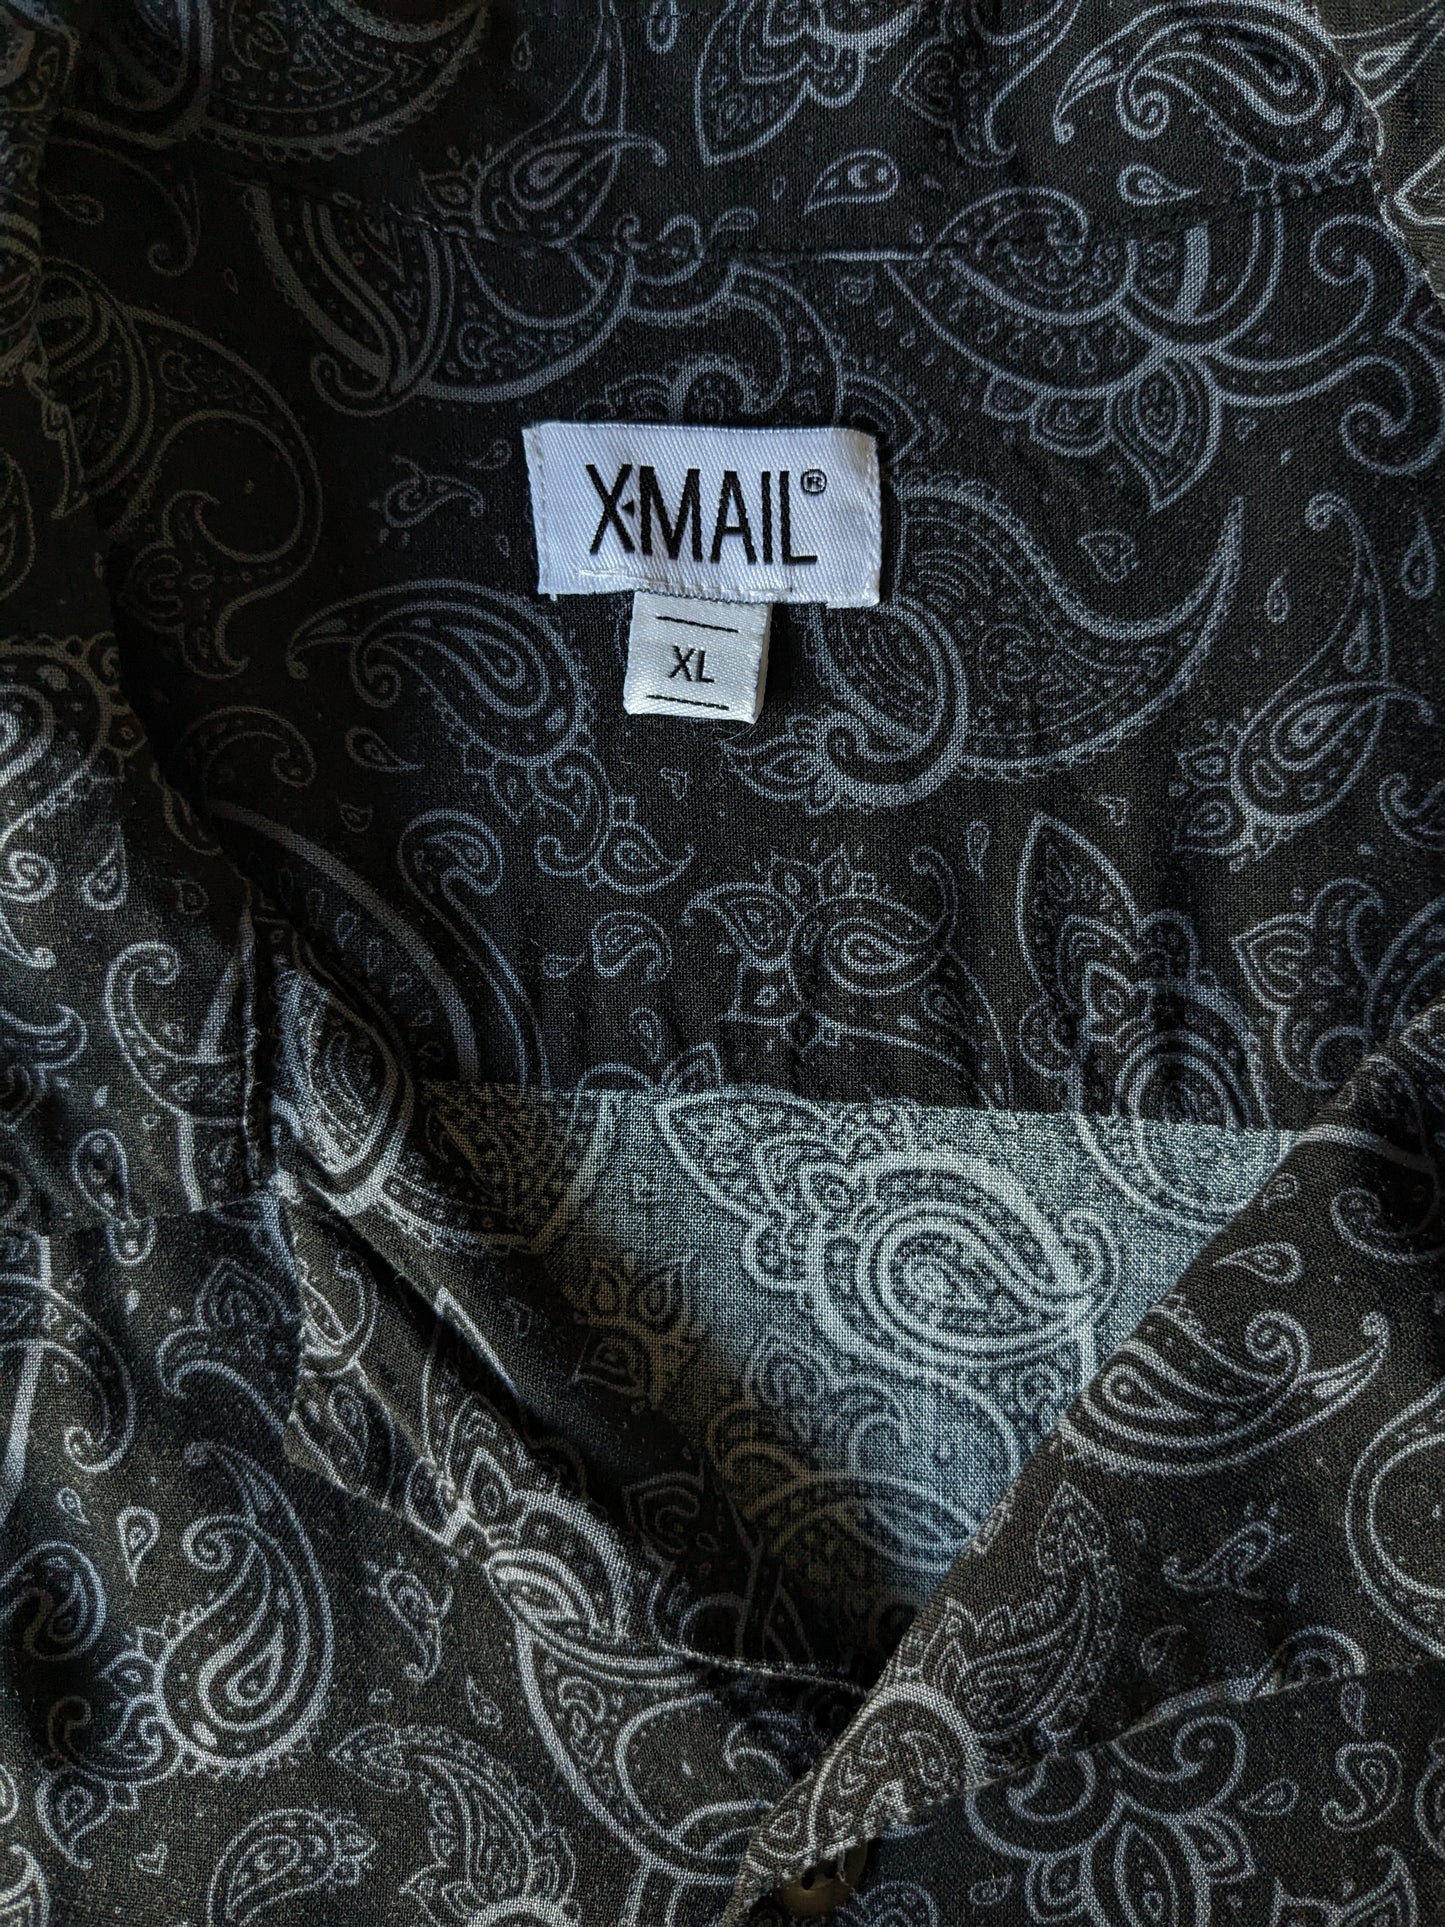 X-Mail overhemd korte mouw. Zwart Grijze paisley print.  Maat XL.